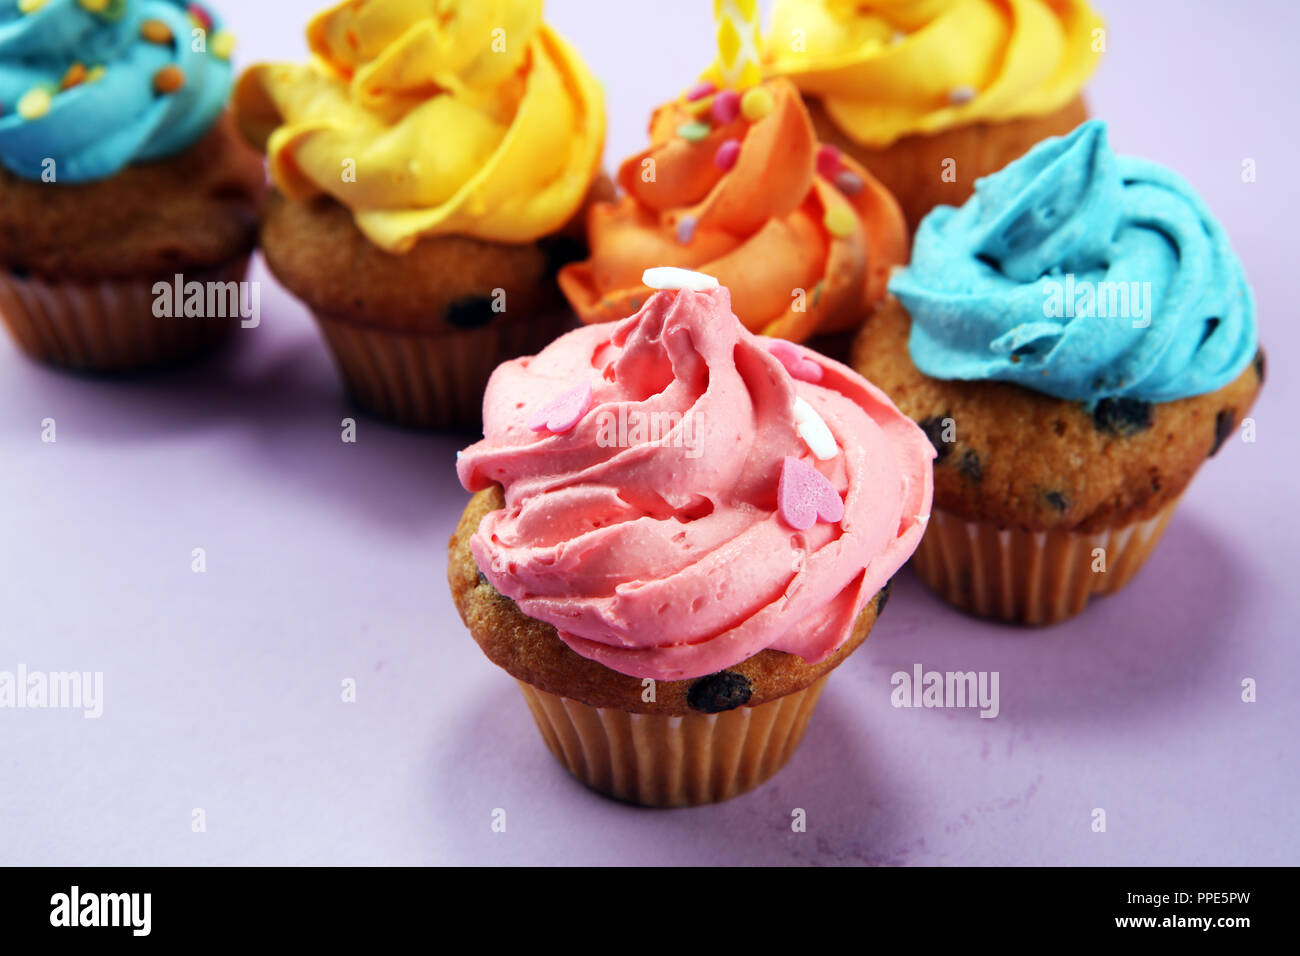 Tasty cupcakes on pinke background. Birthday cupcake in rainbow colors Stock Photo